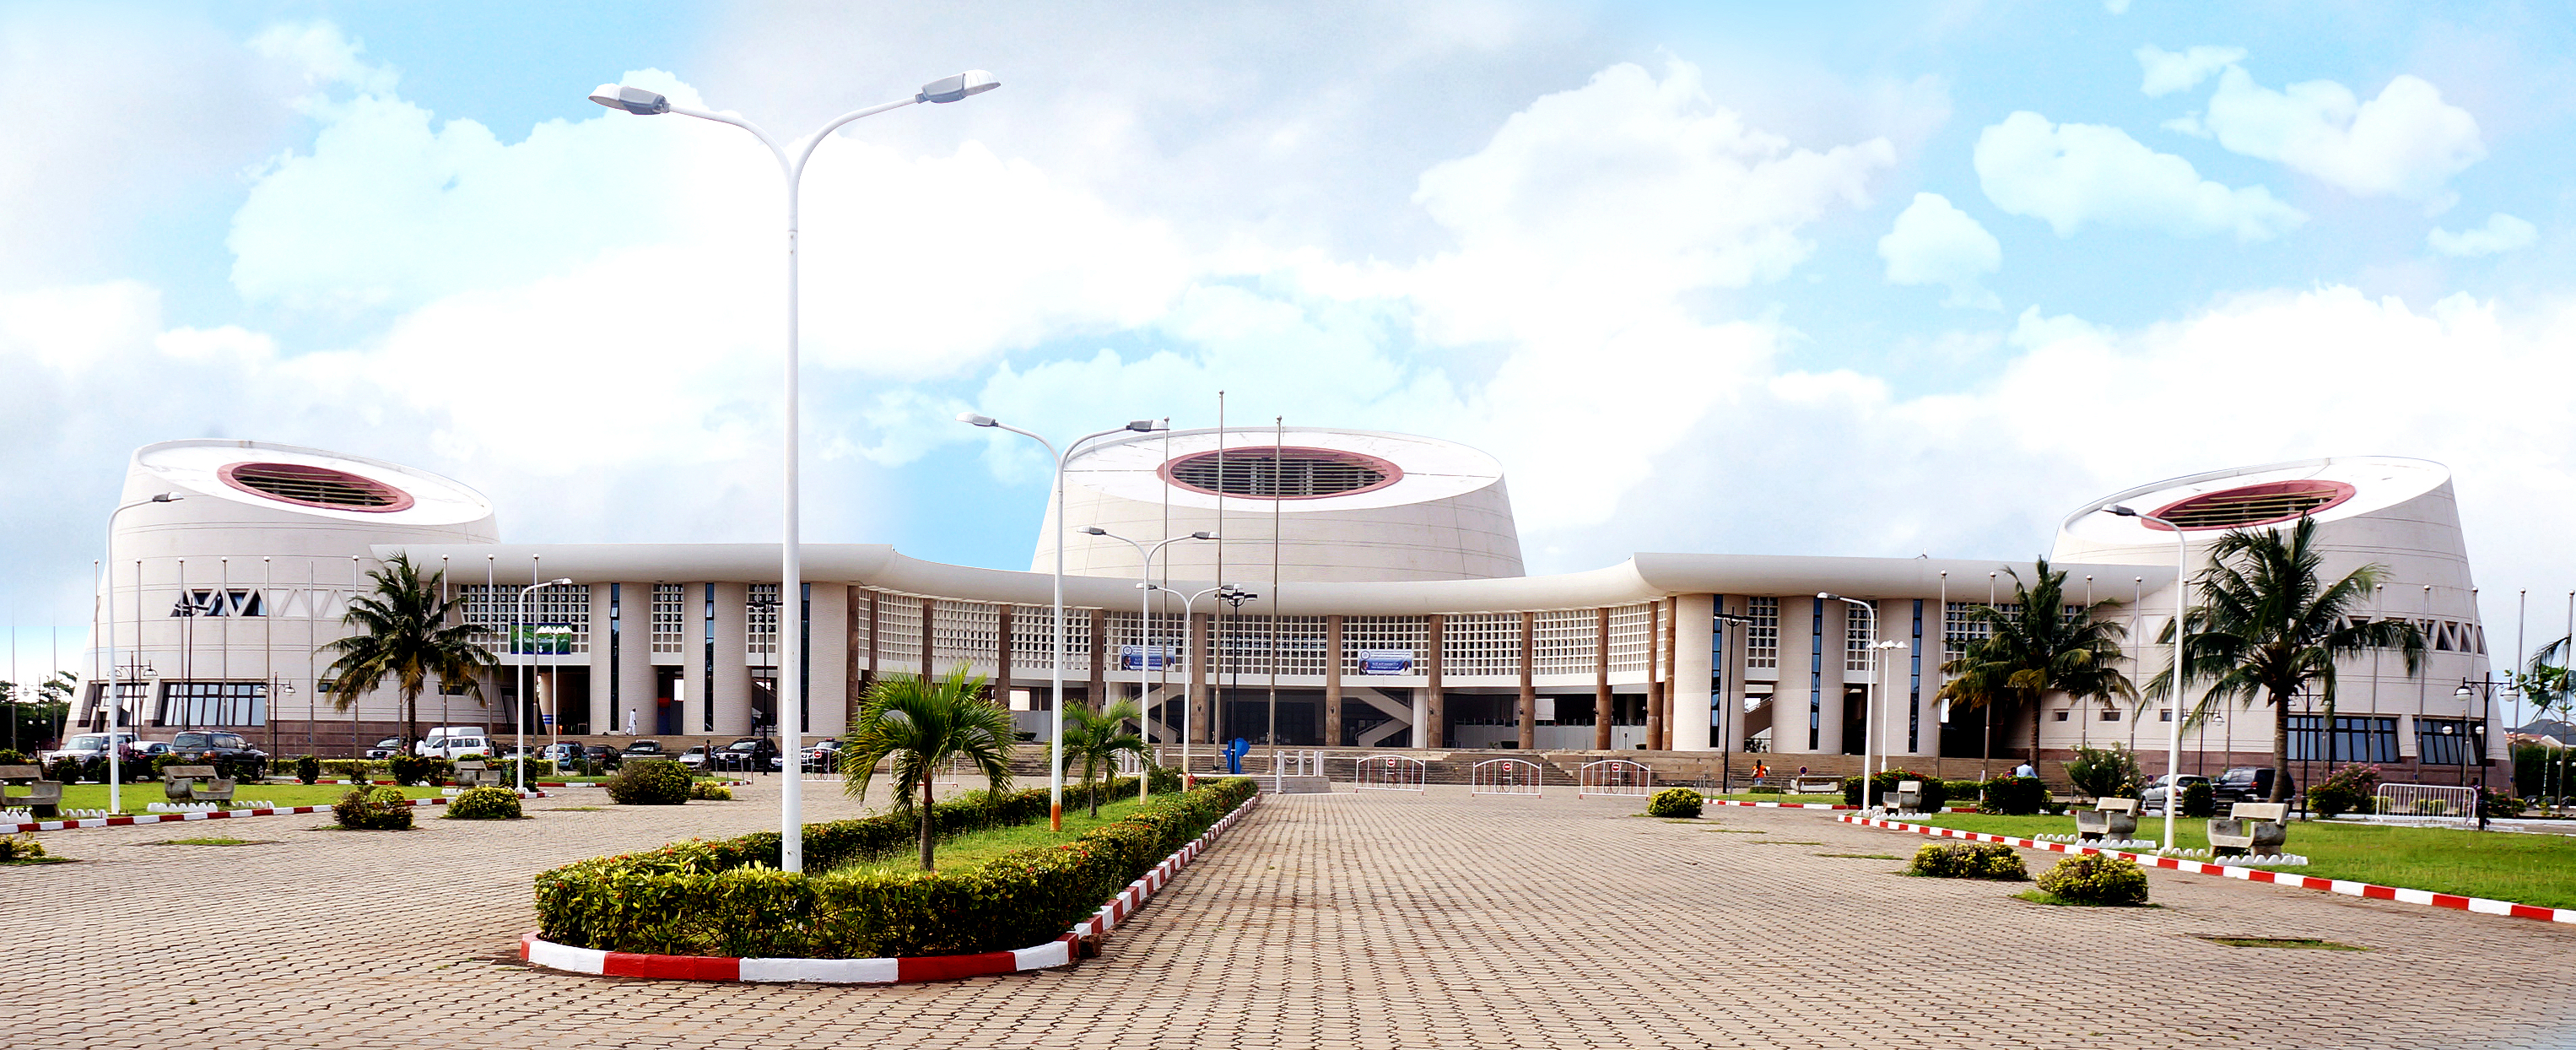 Kongresszentrum von Cotonou, Benin